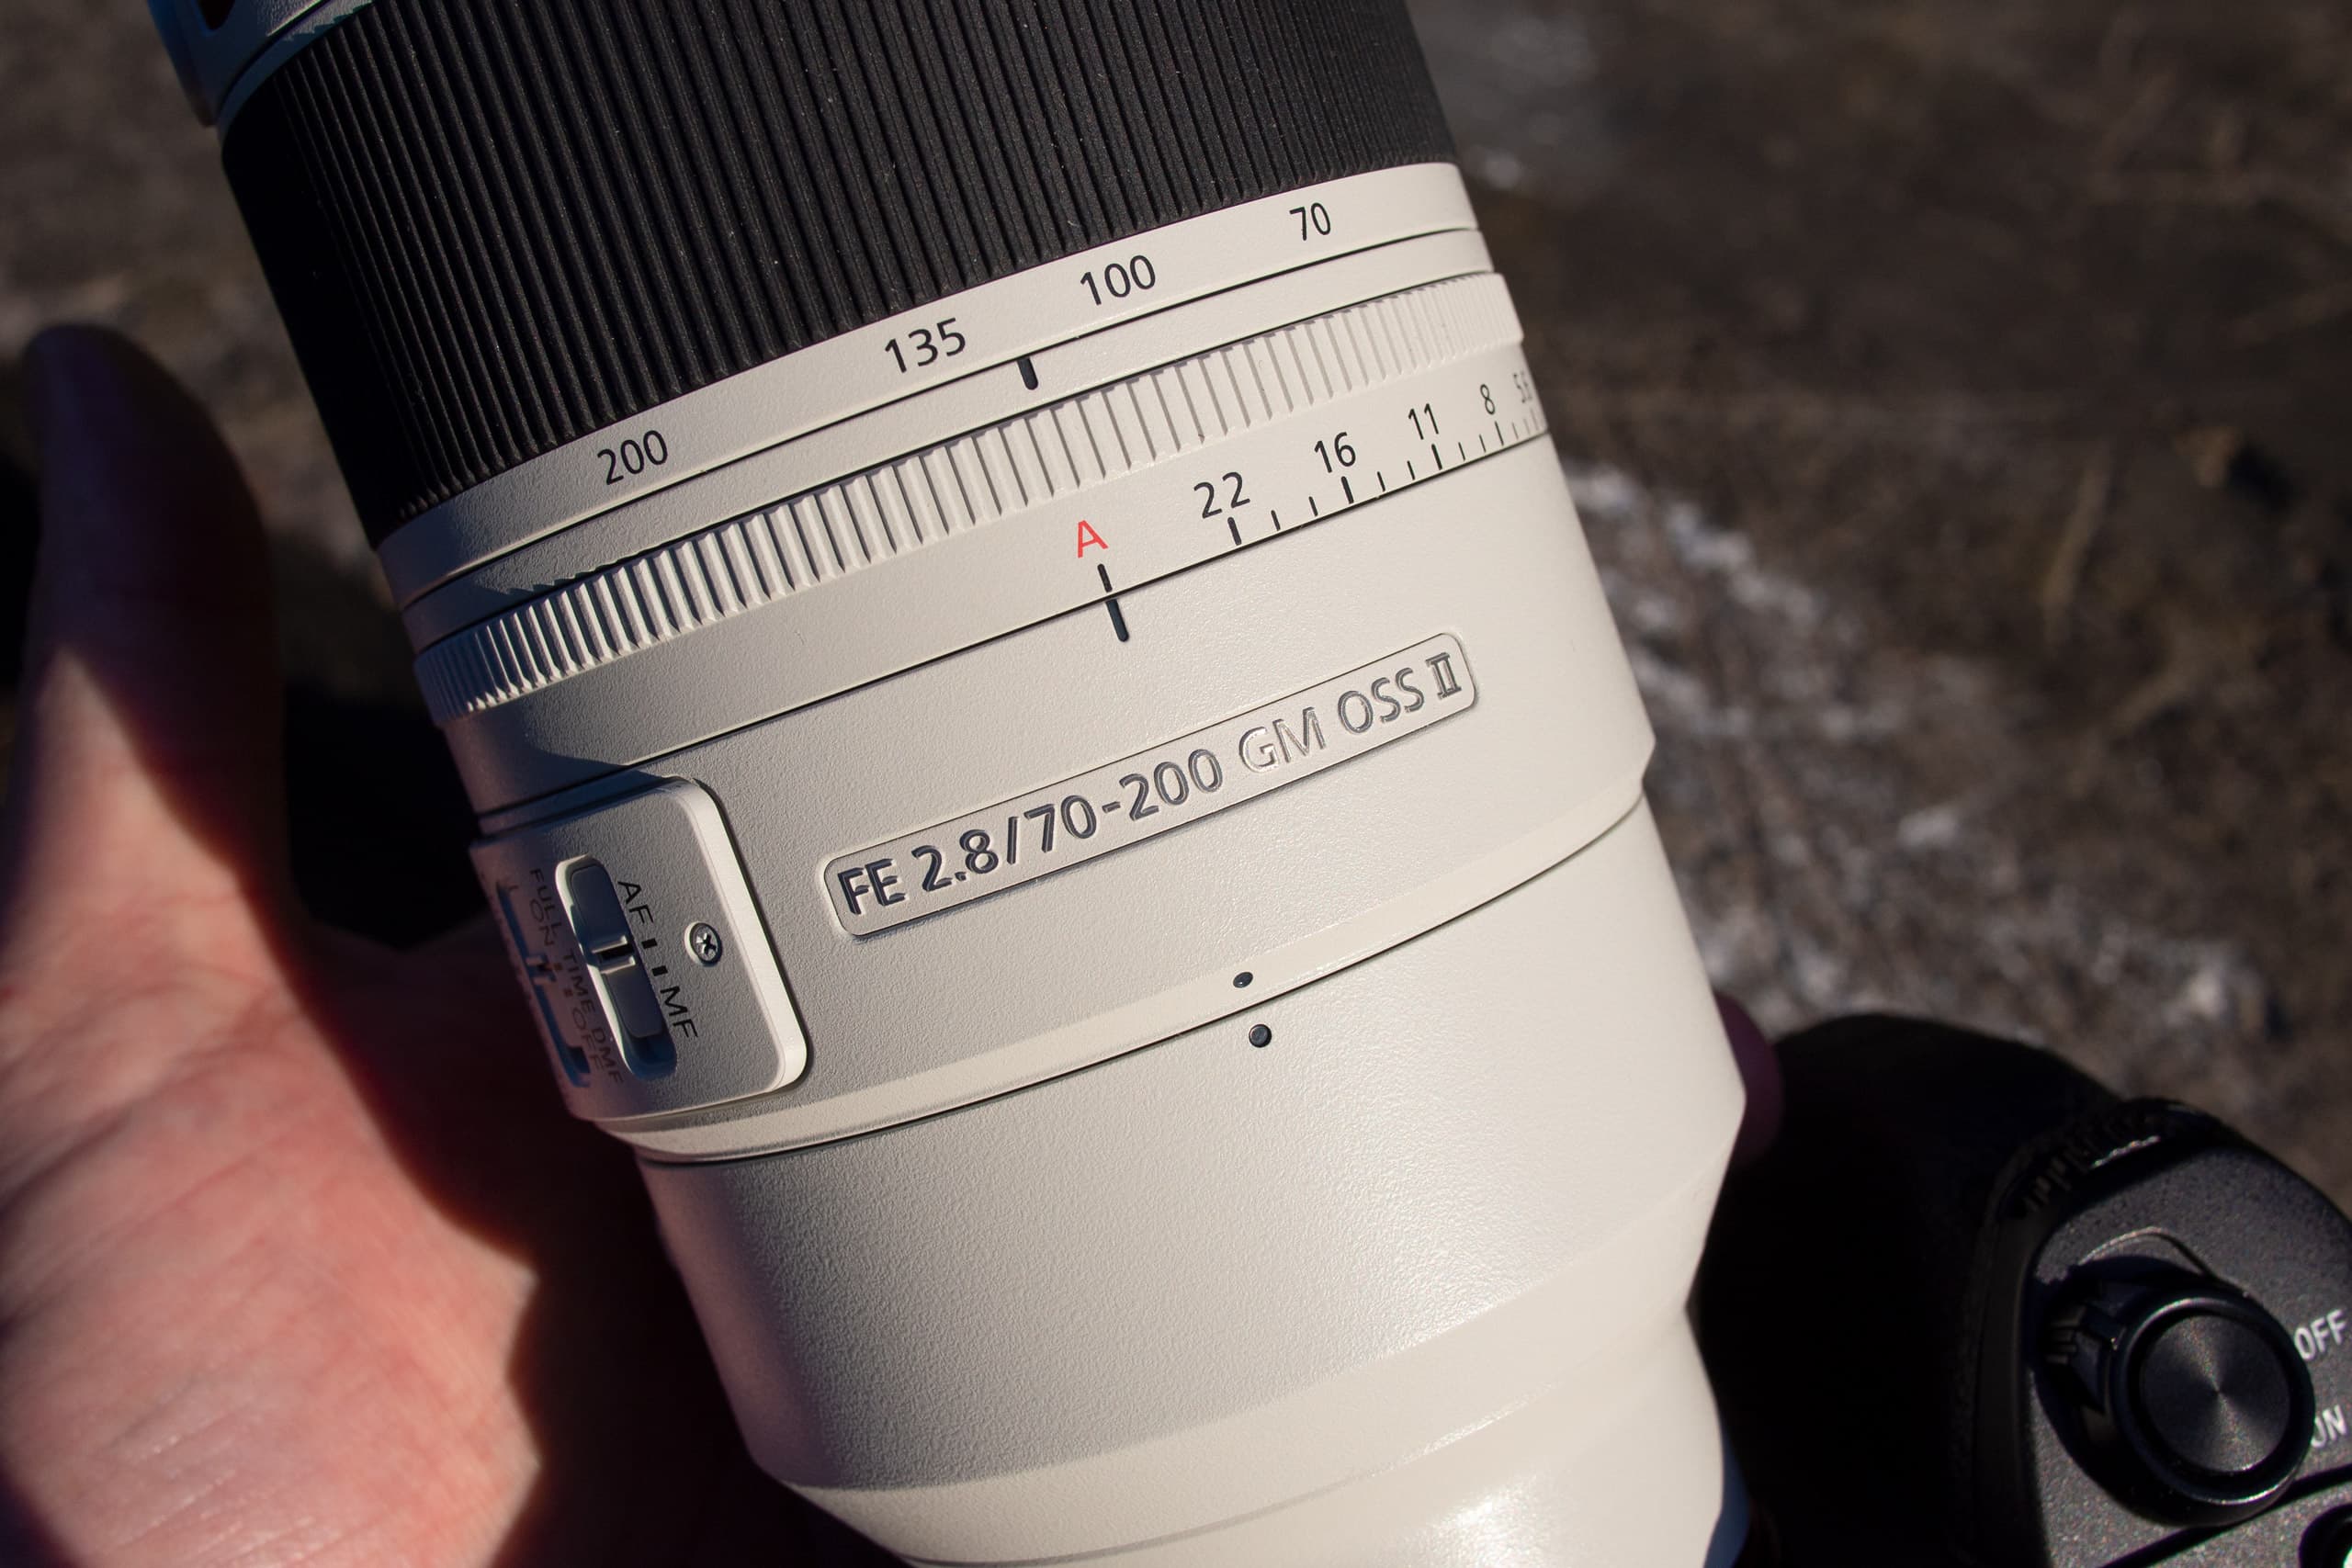 Sony FE 70-200mm F2.8 GM OSS II aperture ring